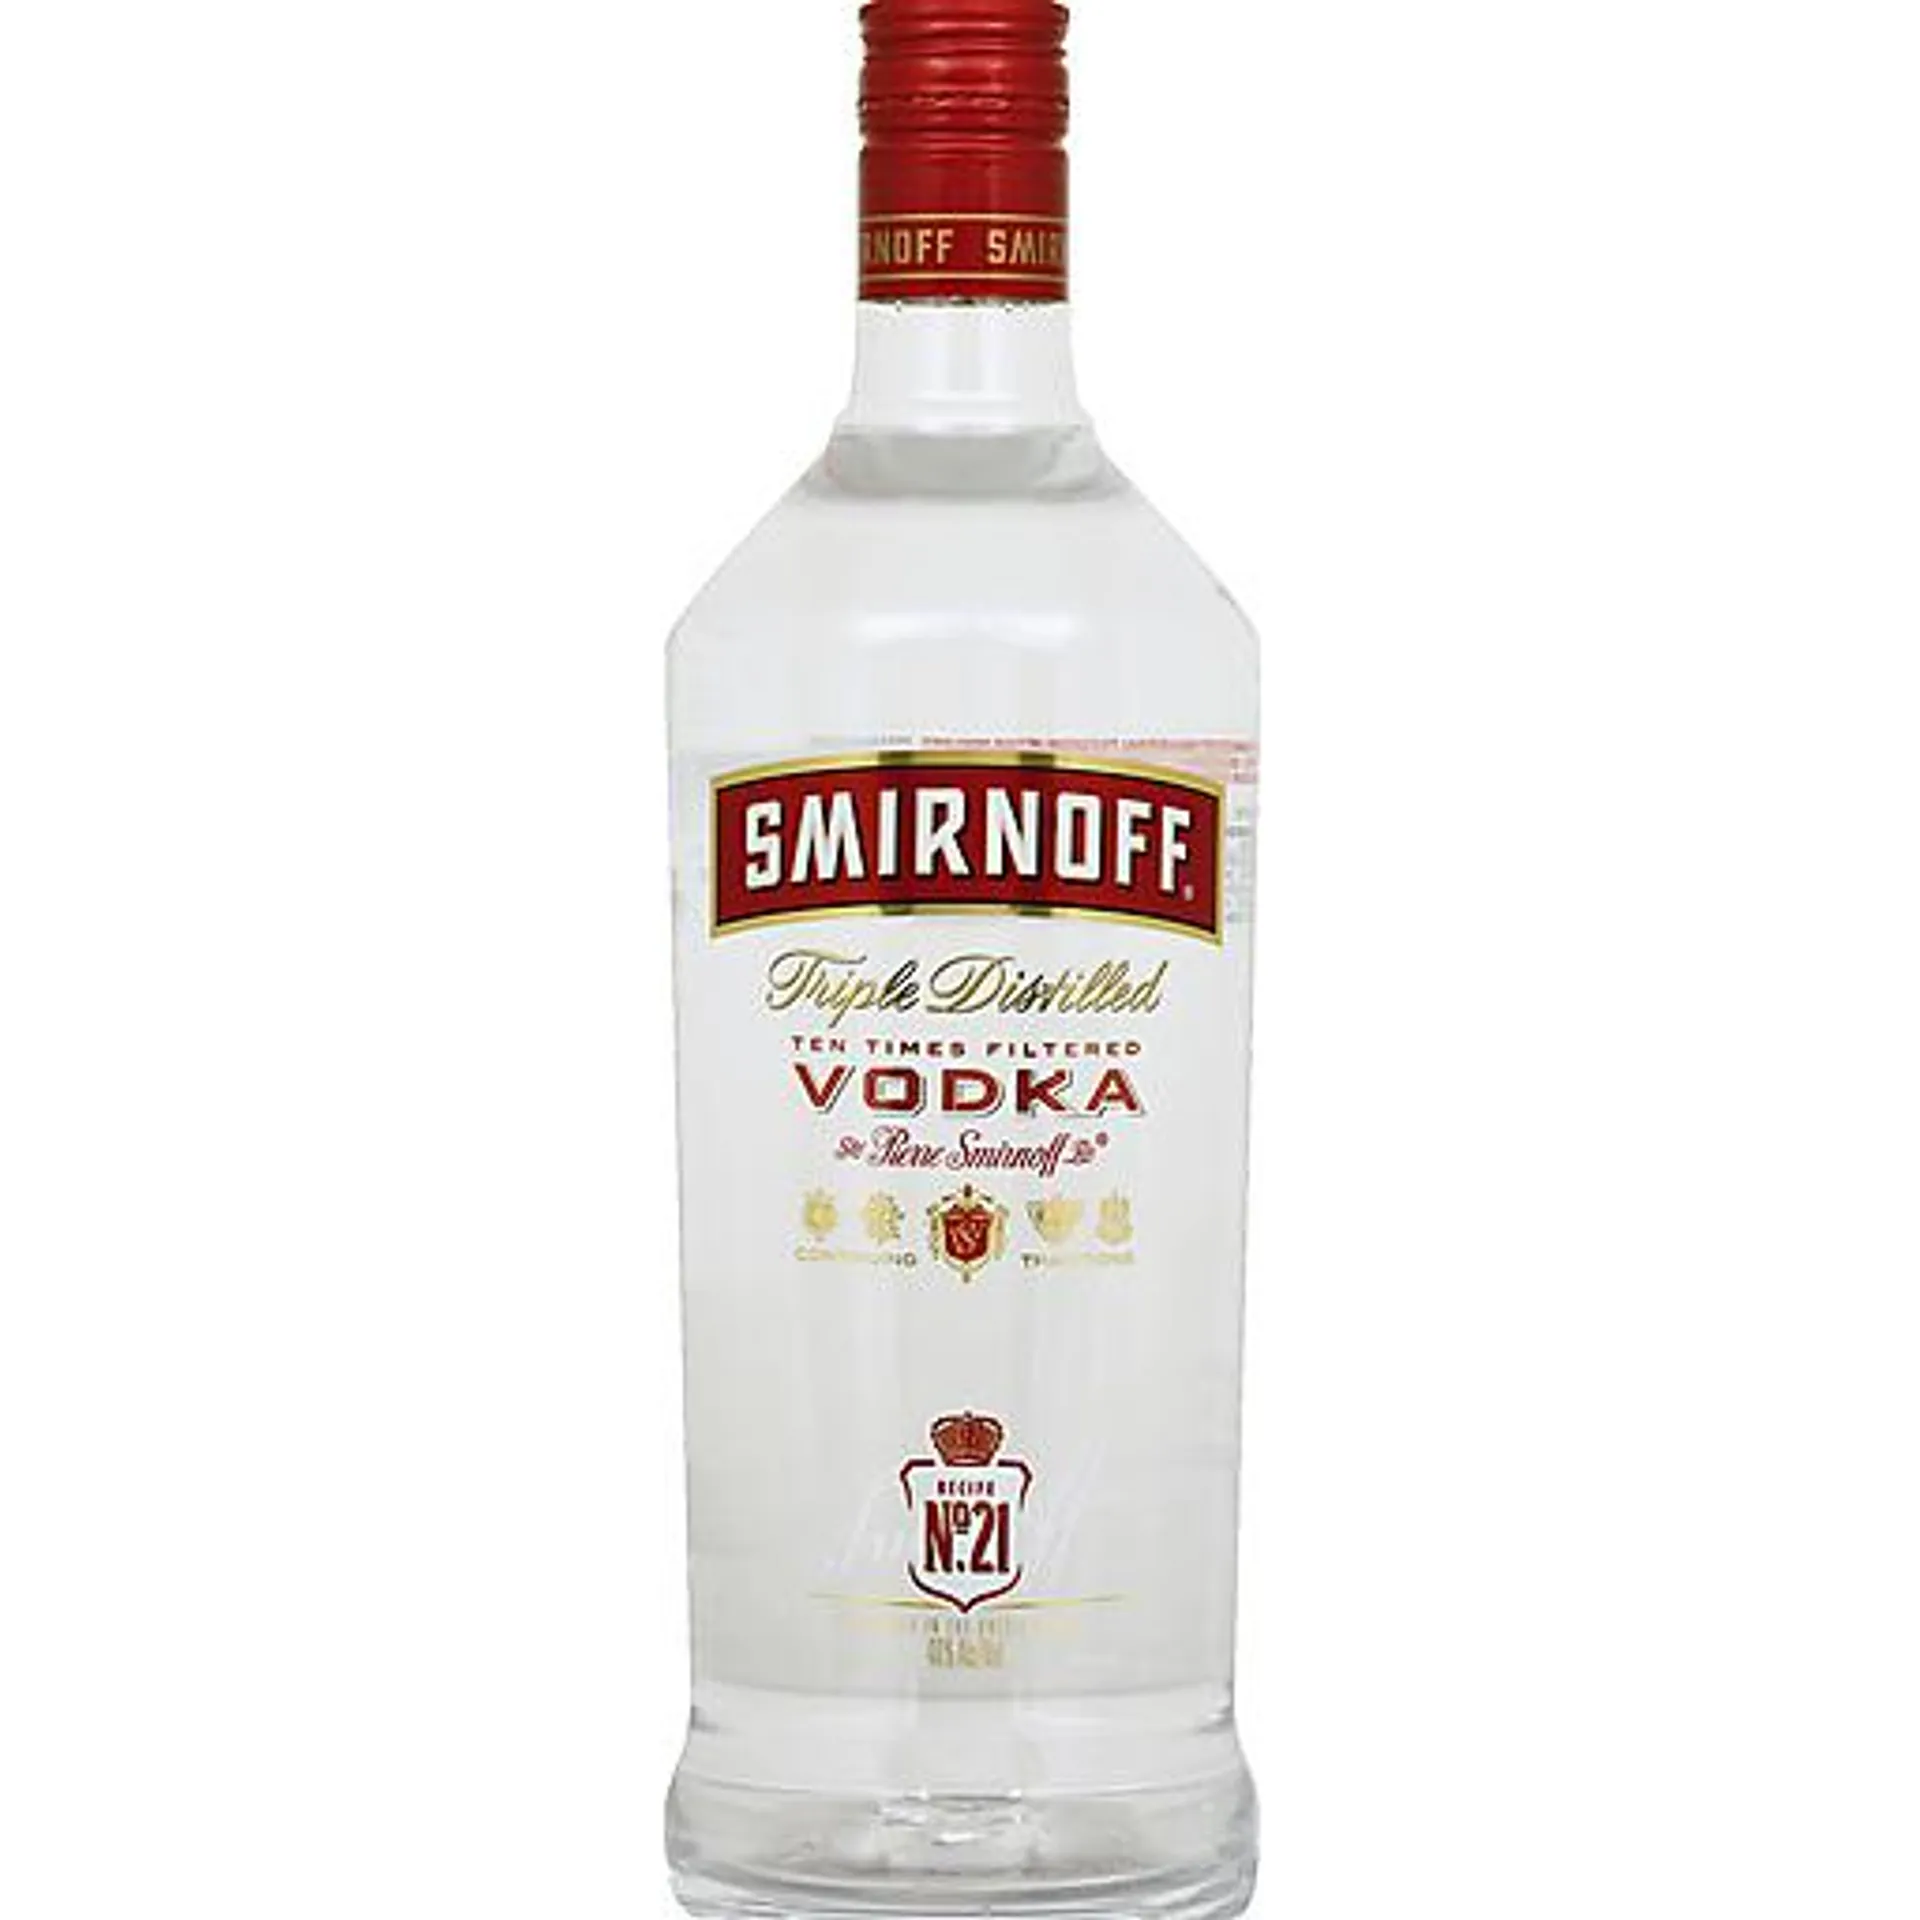 Smirnoff Vodka, Triple Distilled, Recipe No. 21 1.75 l